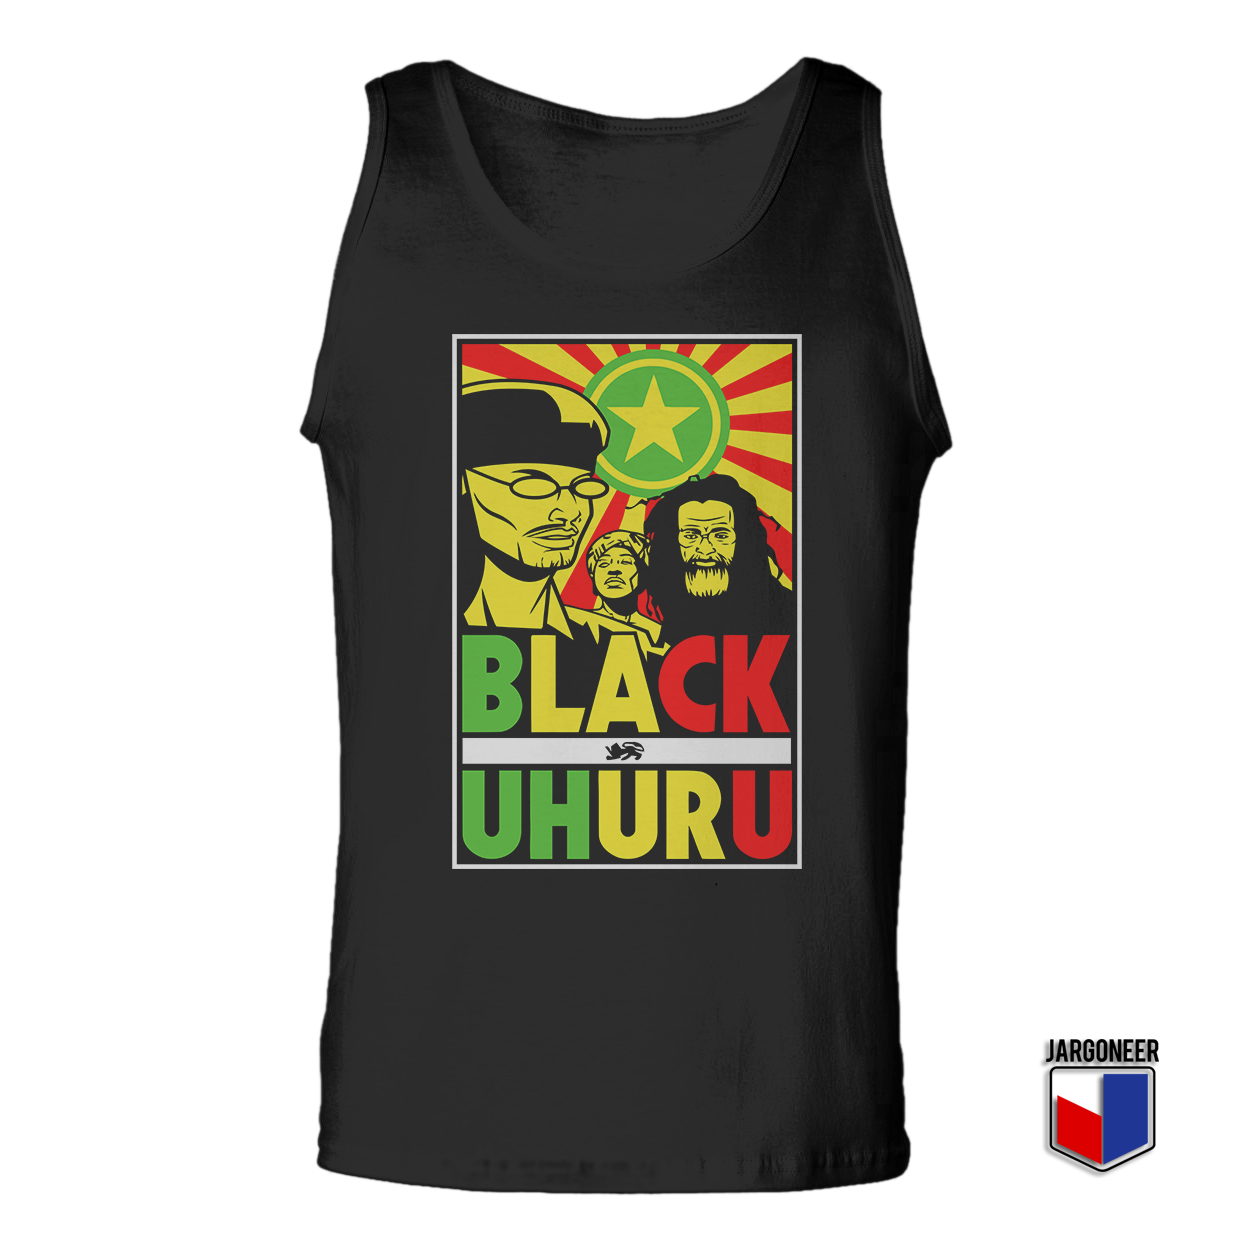 Black Uhuru Black Tank Top - Shop Unique Graphic Cool Shirt Designs